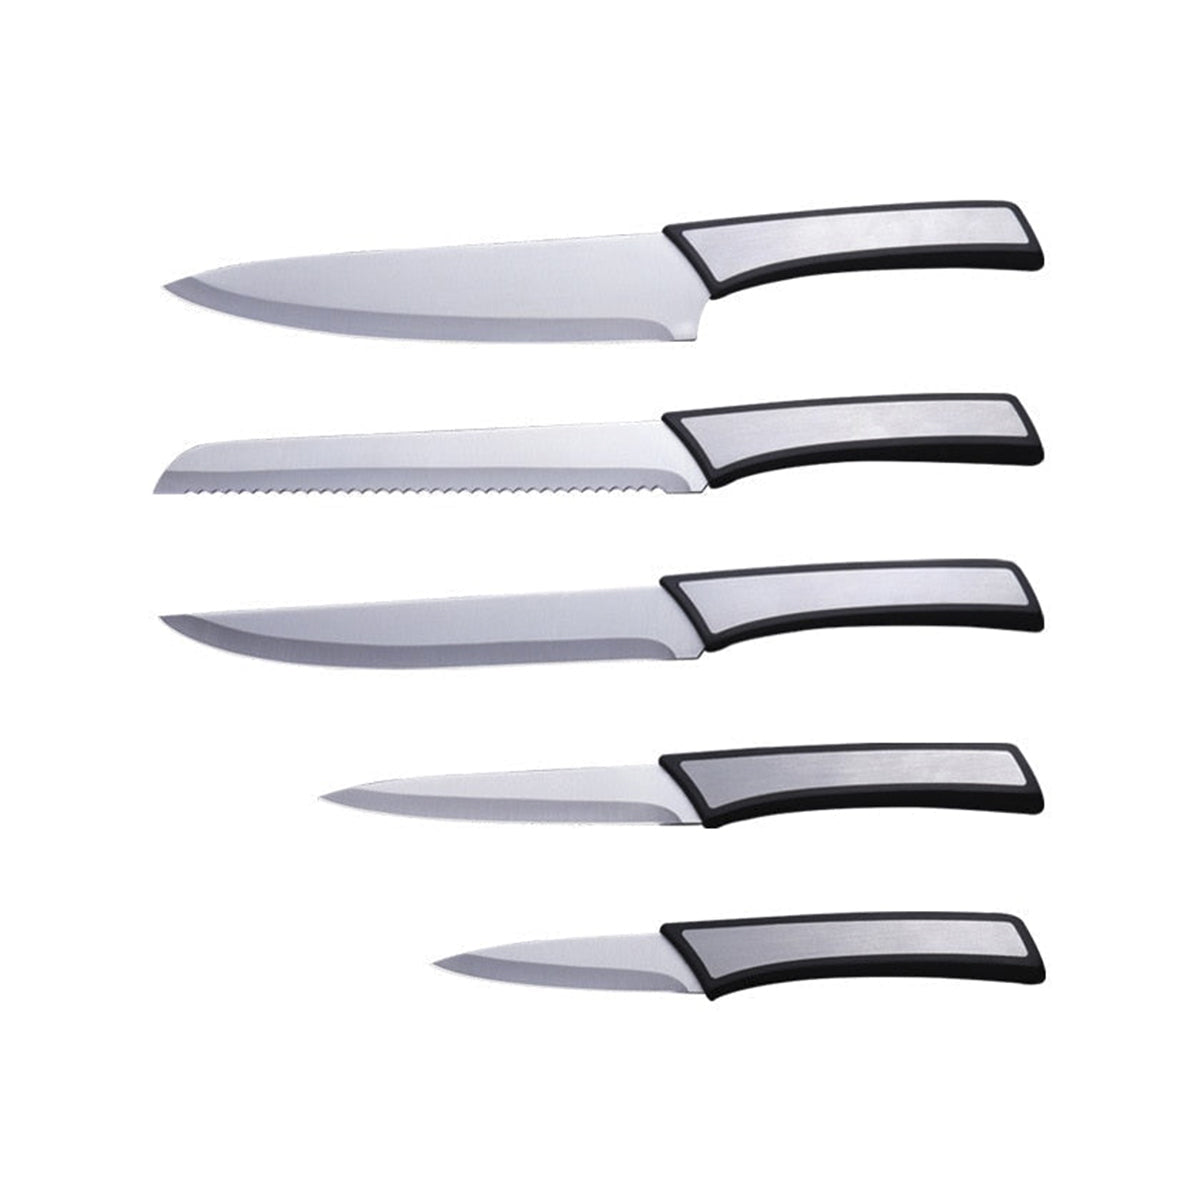 Professional Knife Set